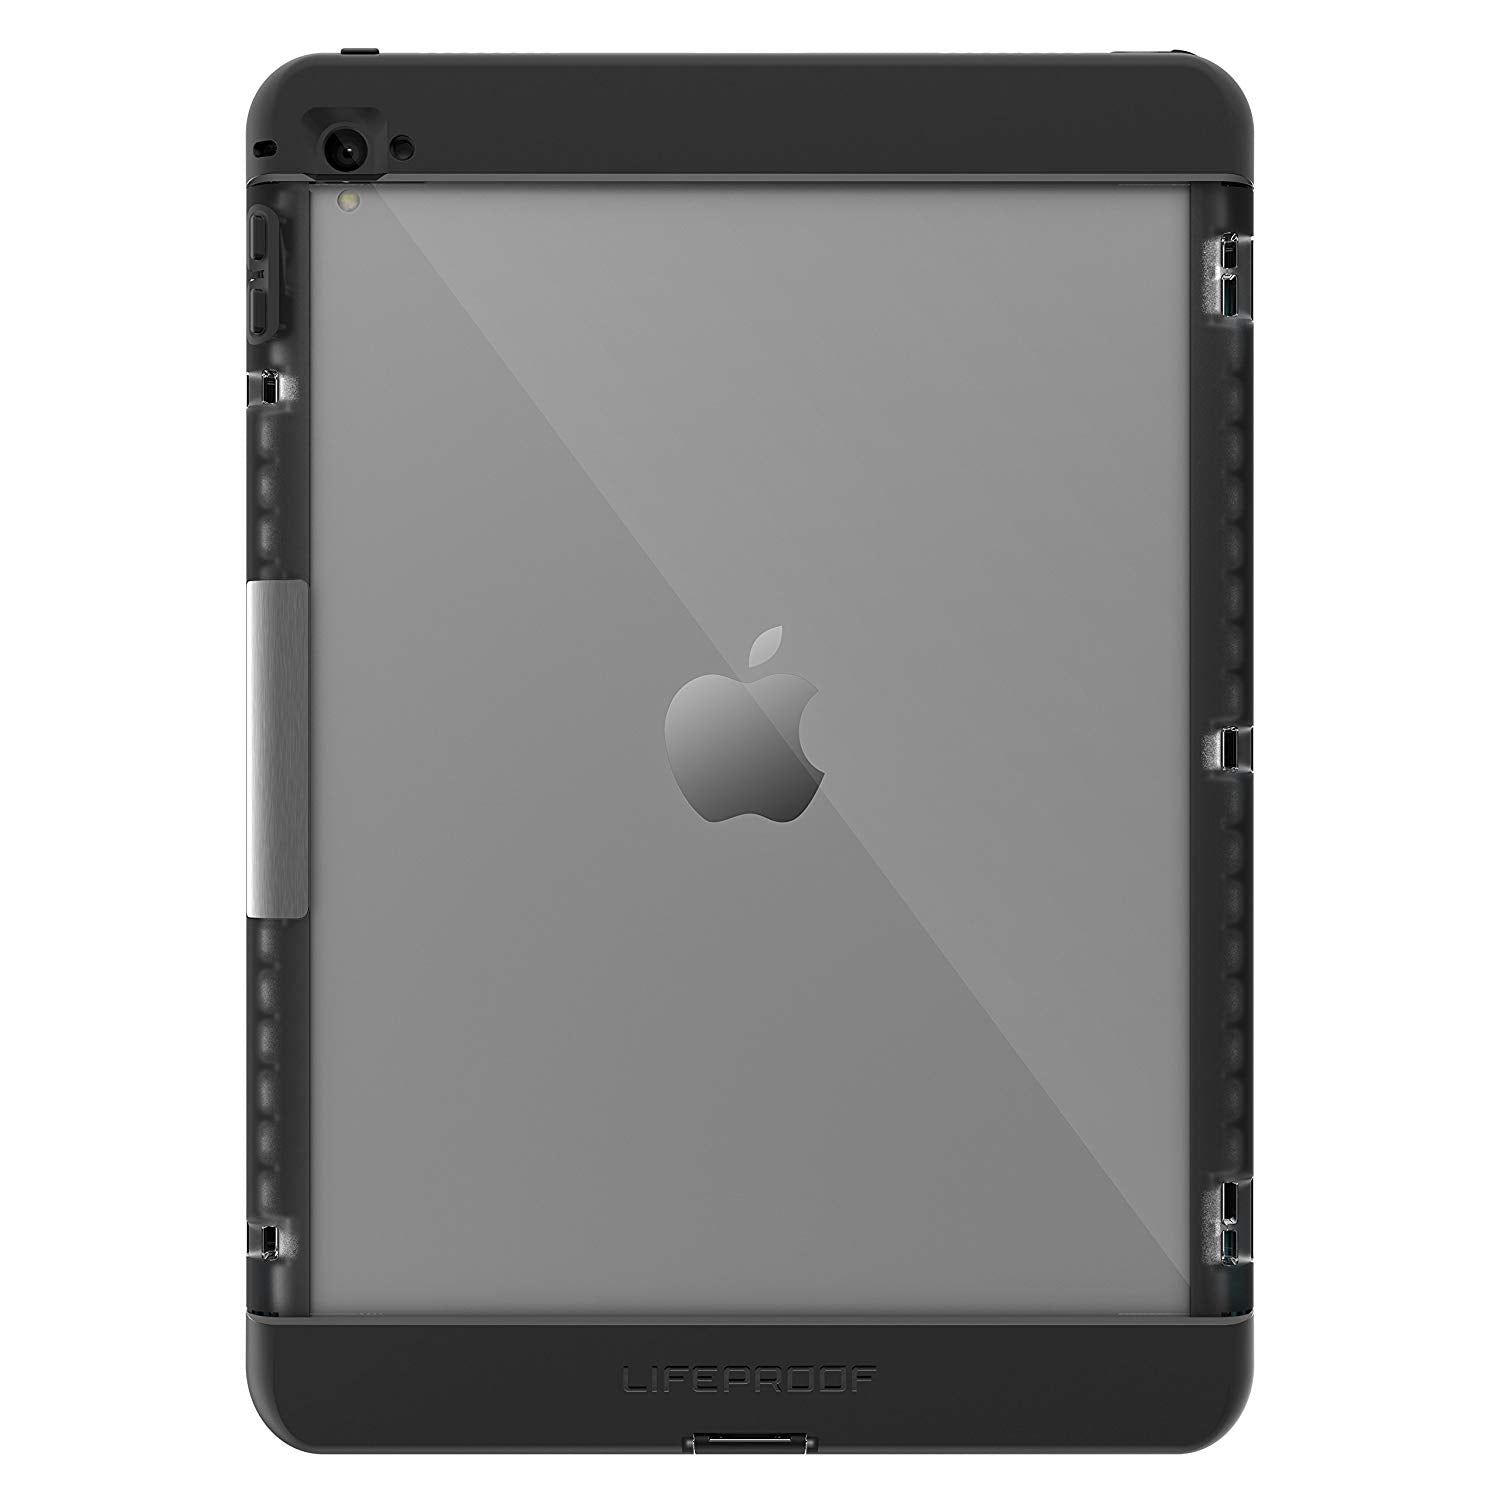 LifeProof NUUD SERIES Waterproof Case for Apple iPad Pro 9.7-inch - Black (New)